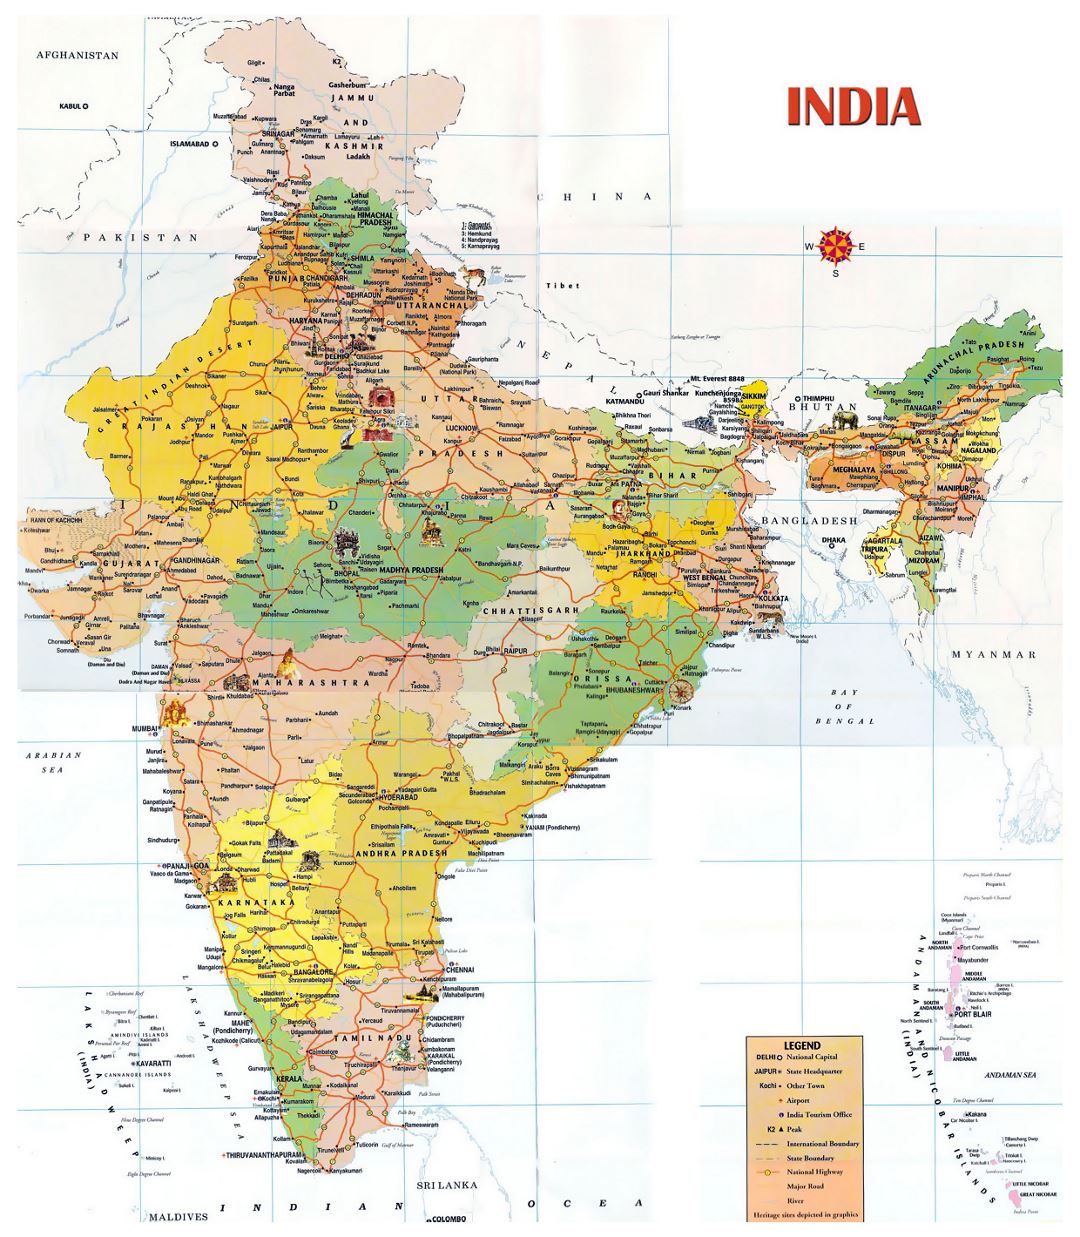 Tourist map of India